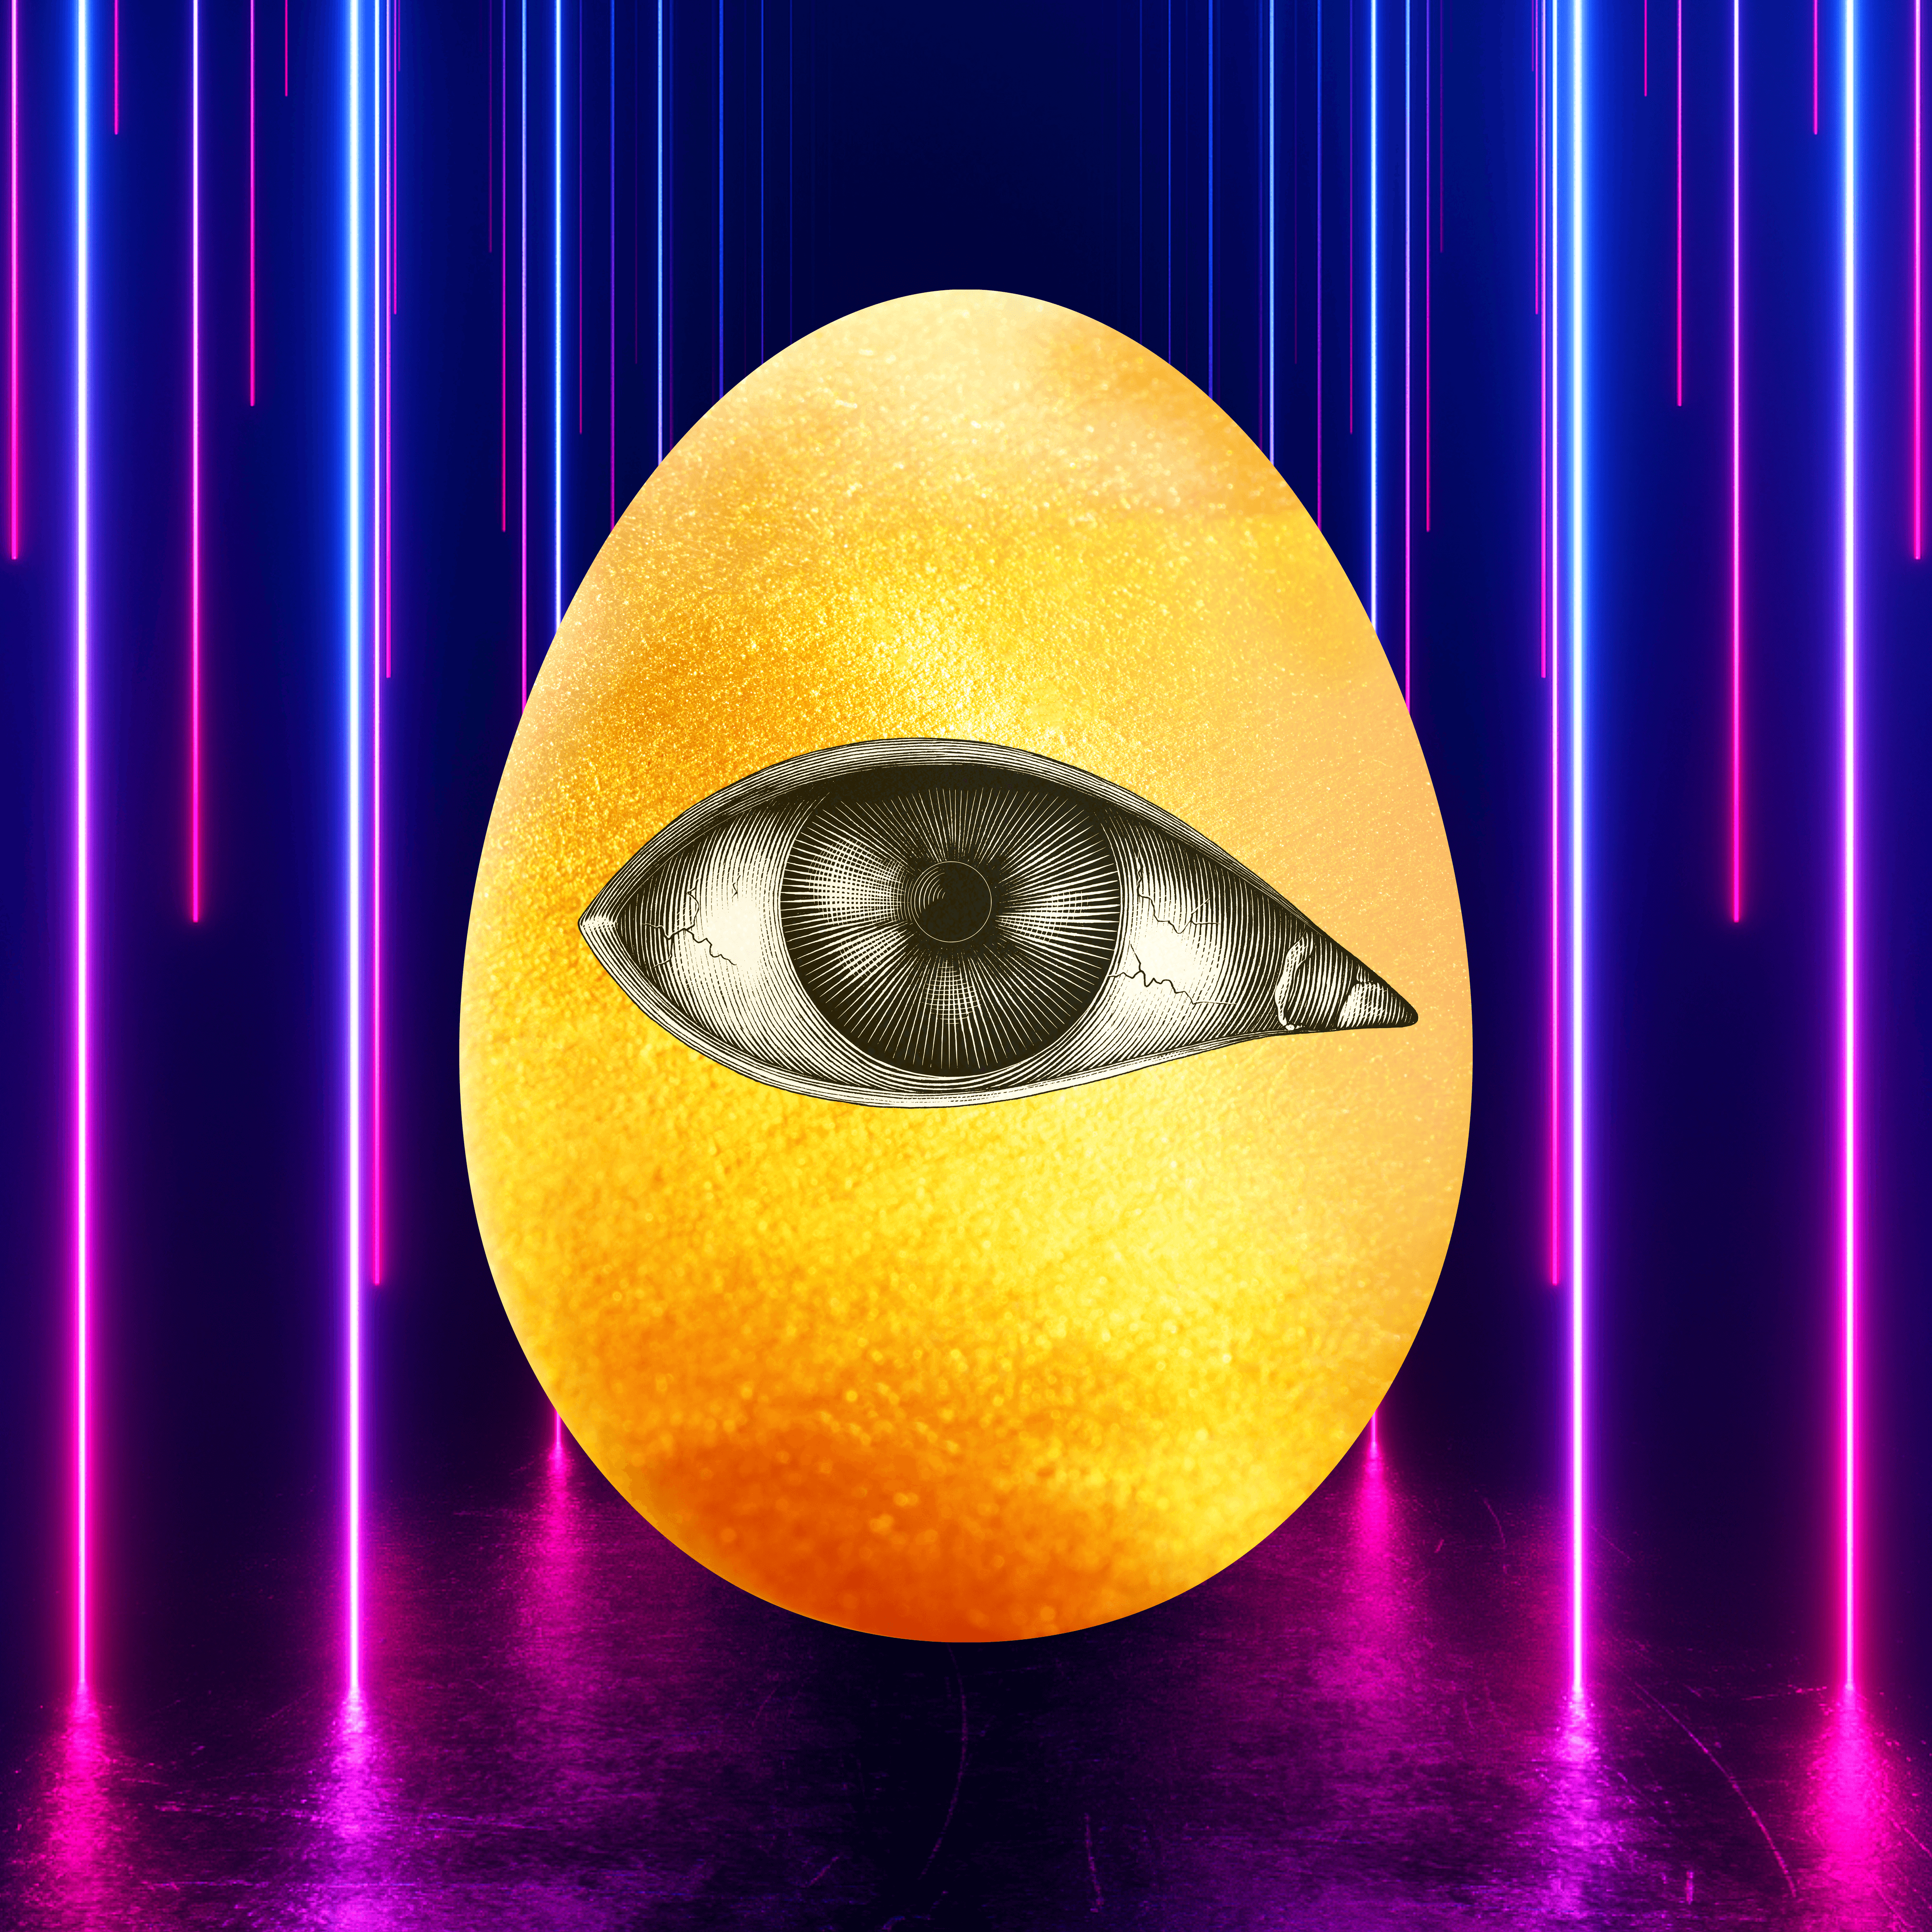 Golden Egg NYC #1181